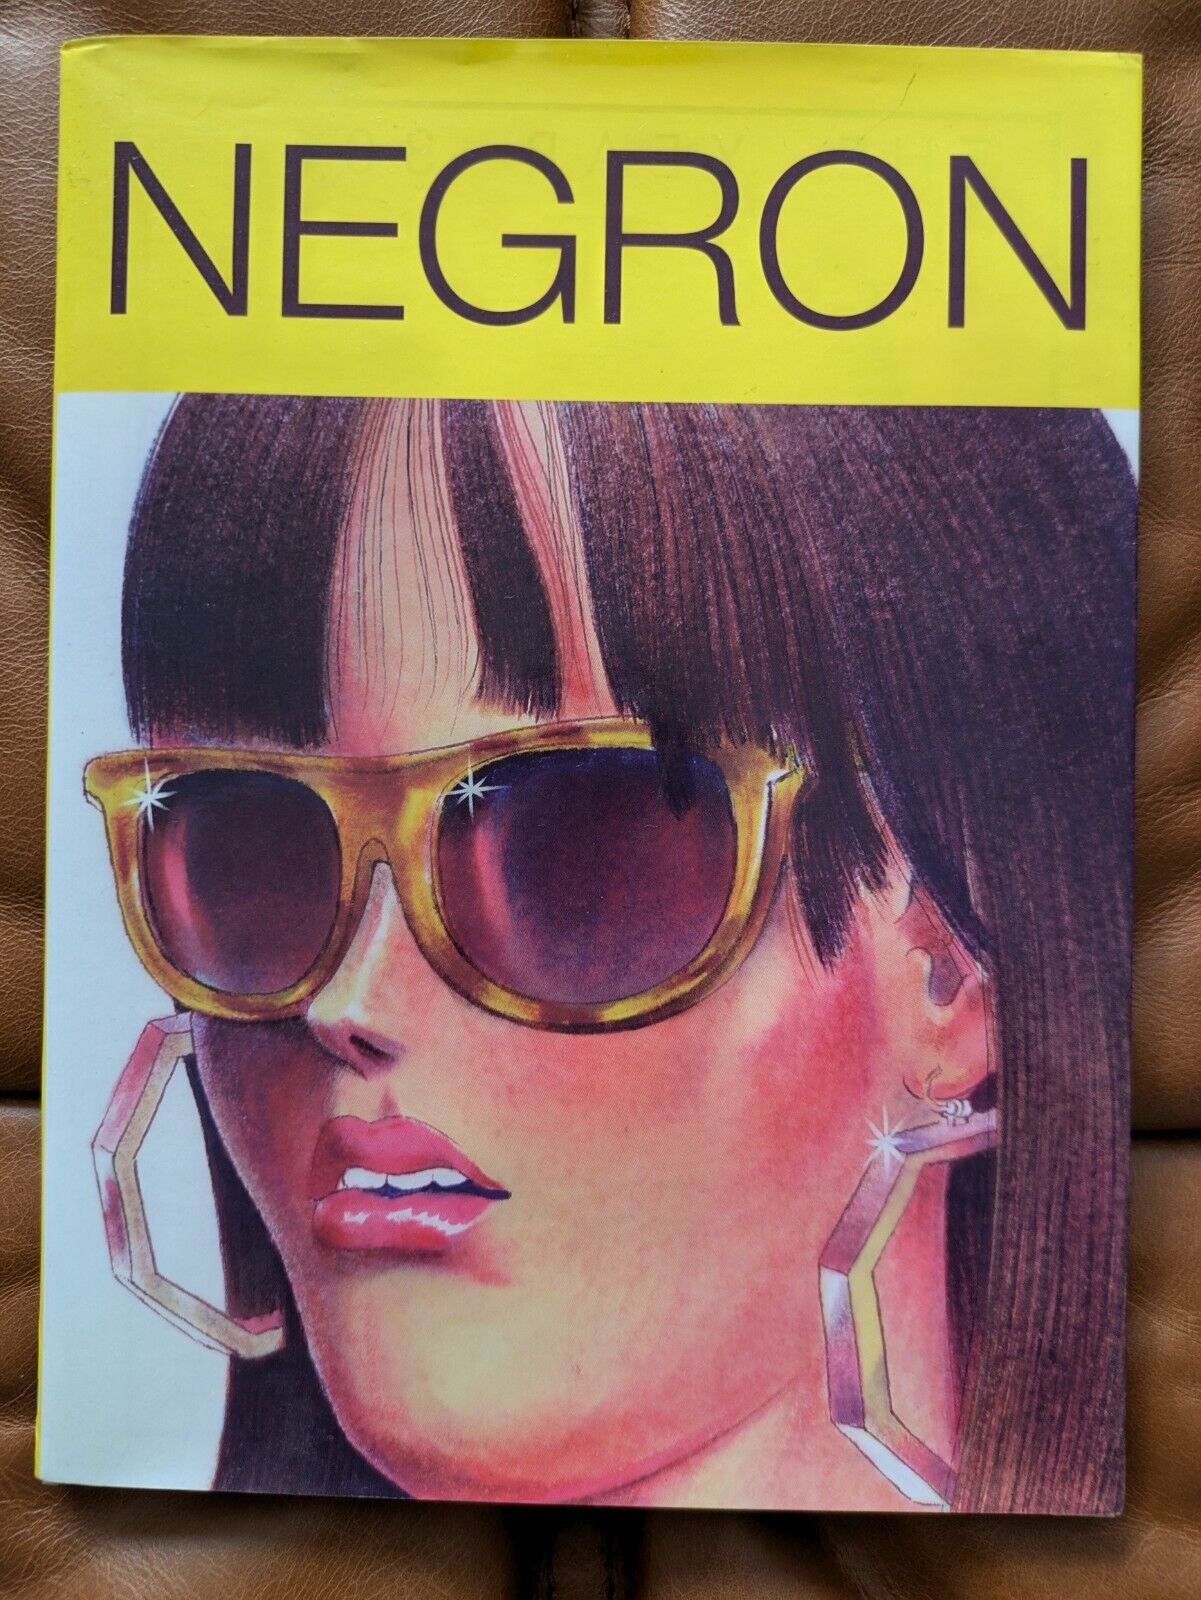 Negron by Jonny Negron (Picturebox)